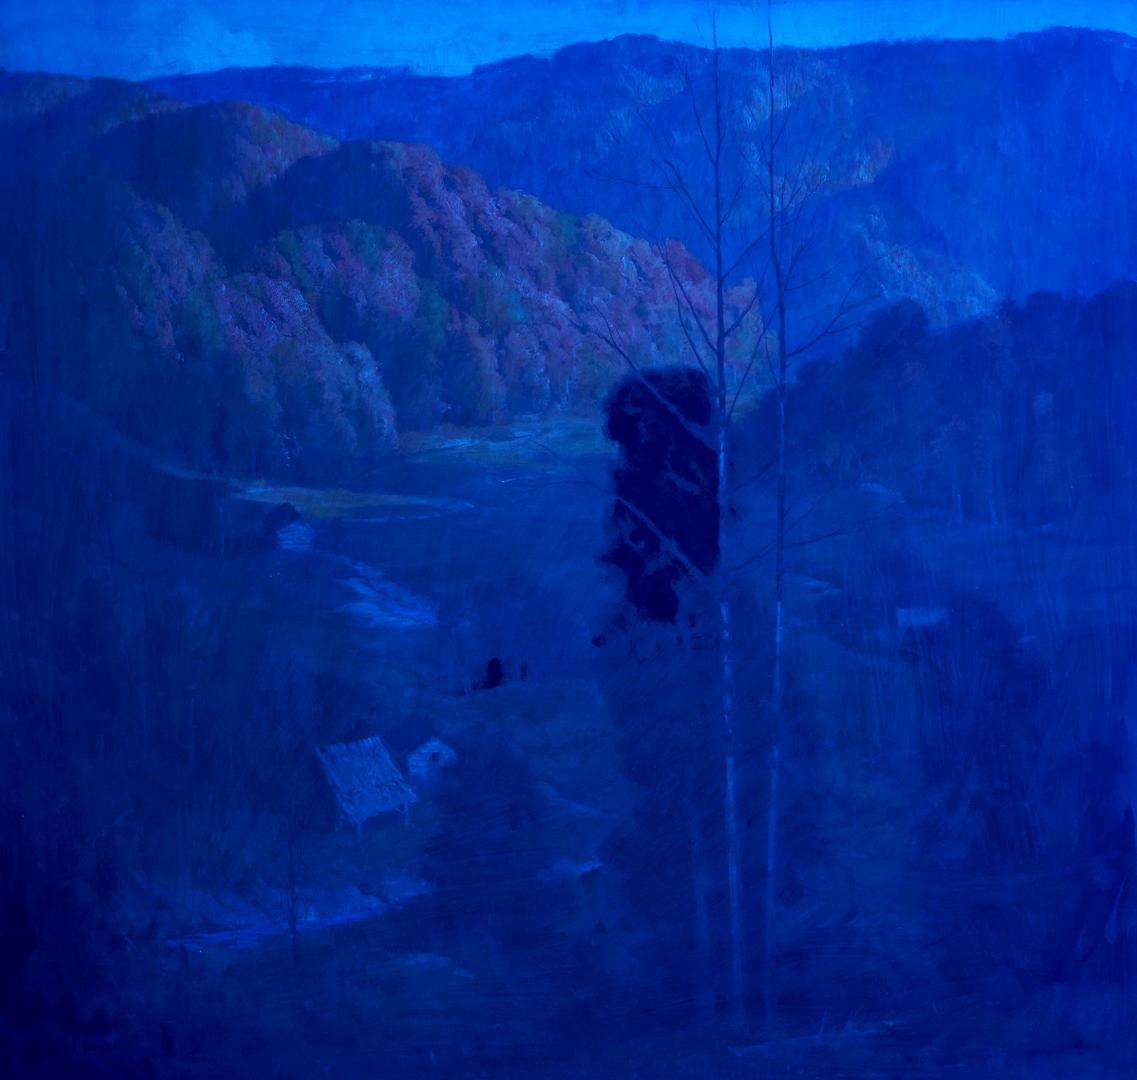 Lot 225: Large Rudolph Ingerle Landscape Oil, Sundown on the Hollow